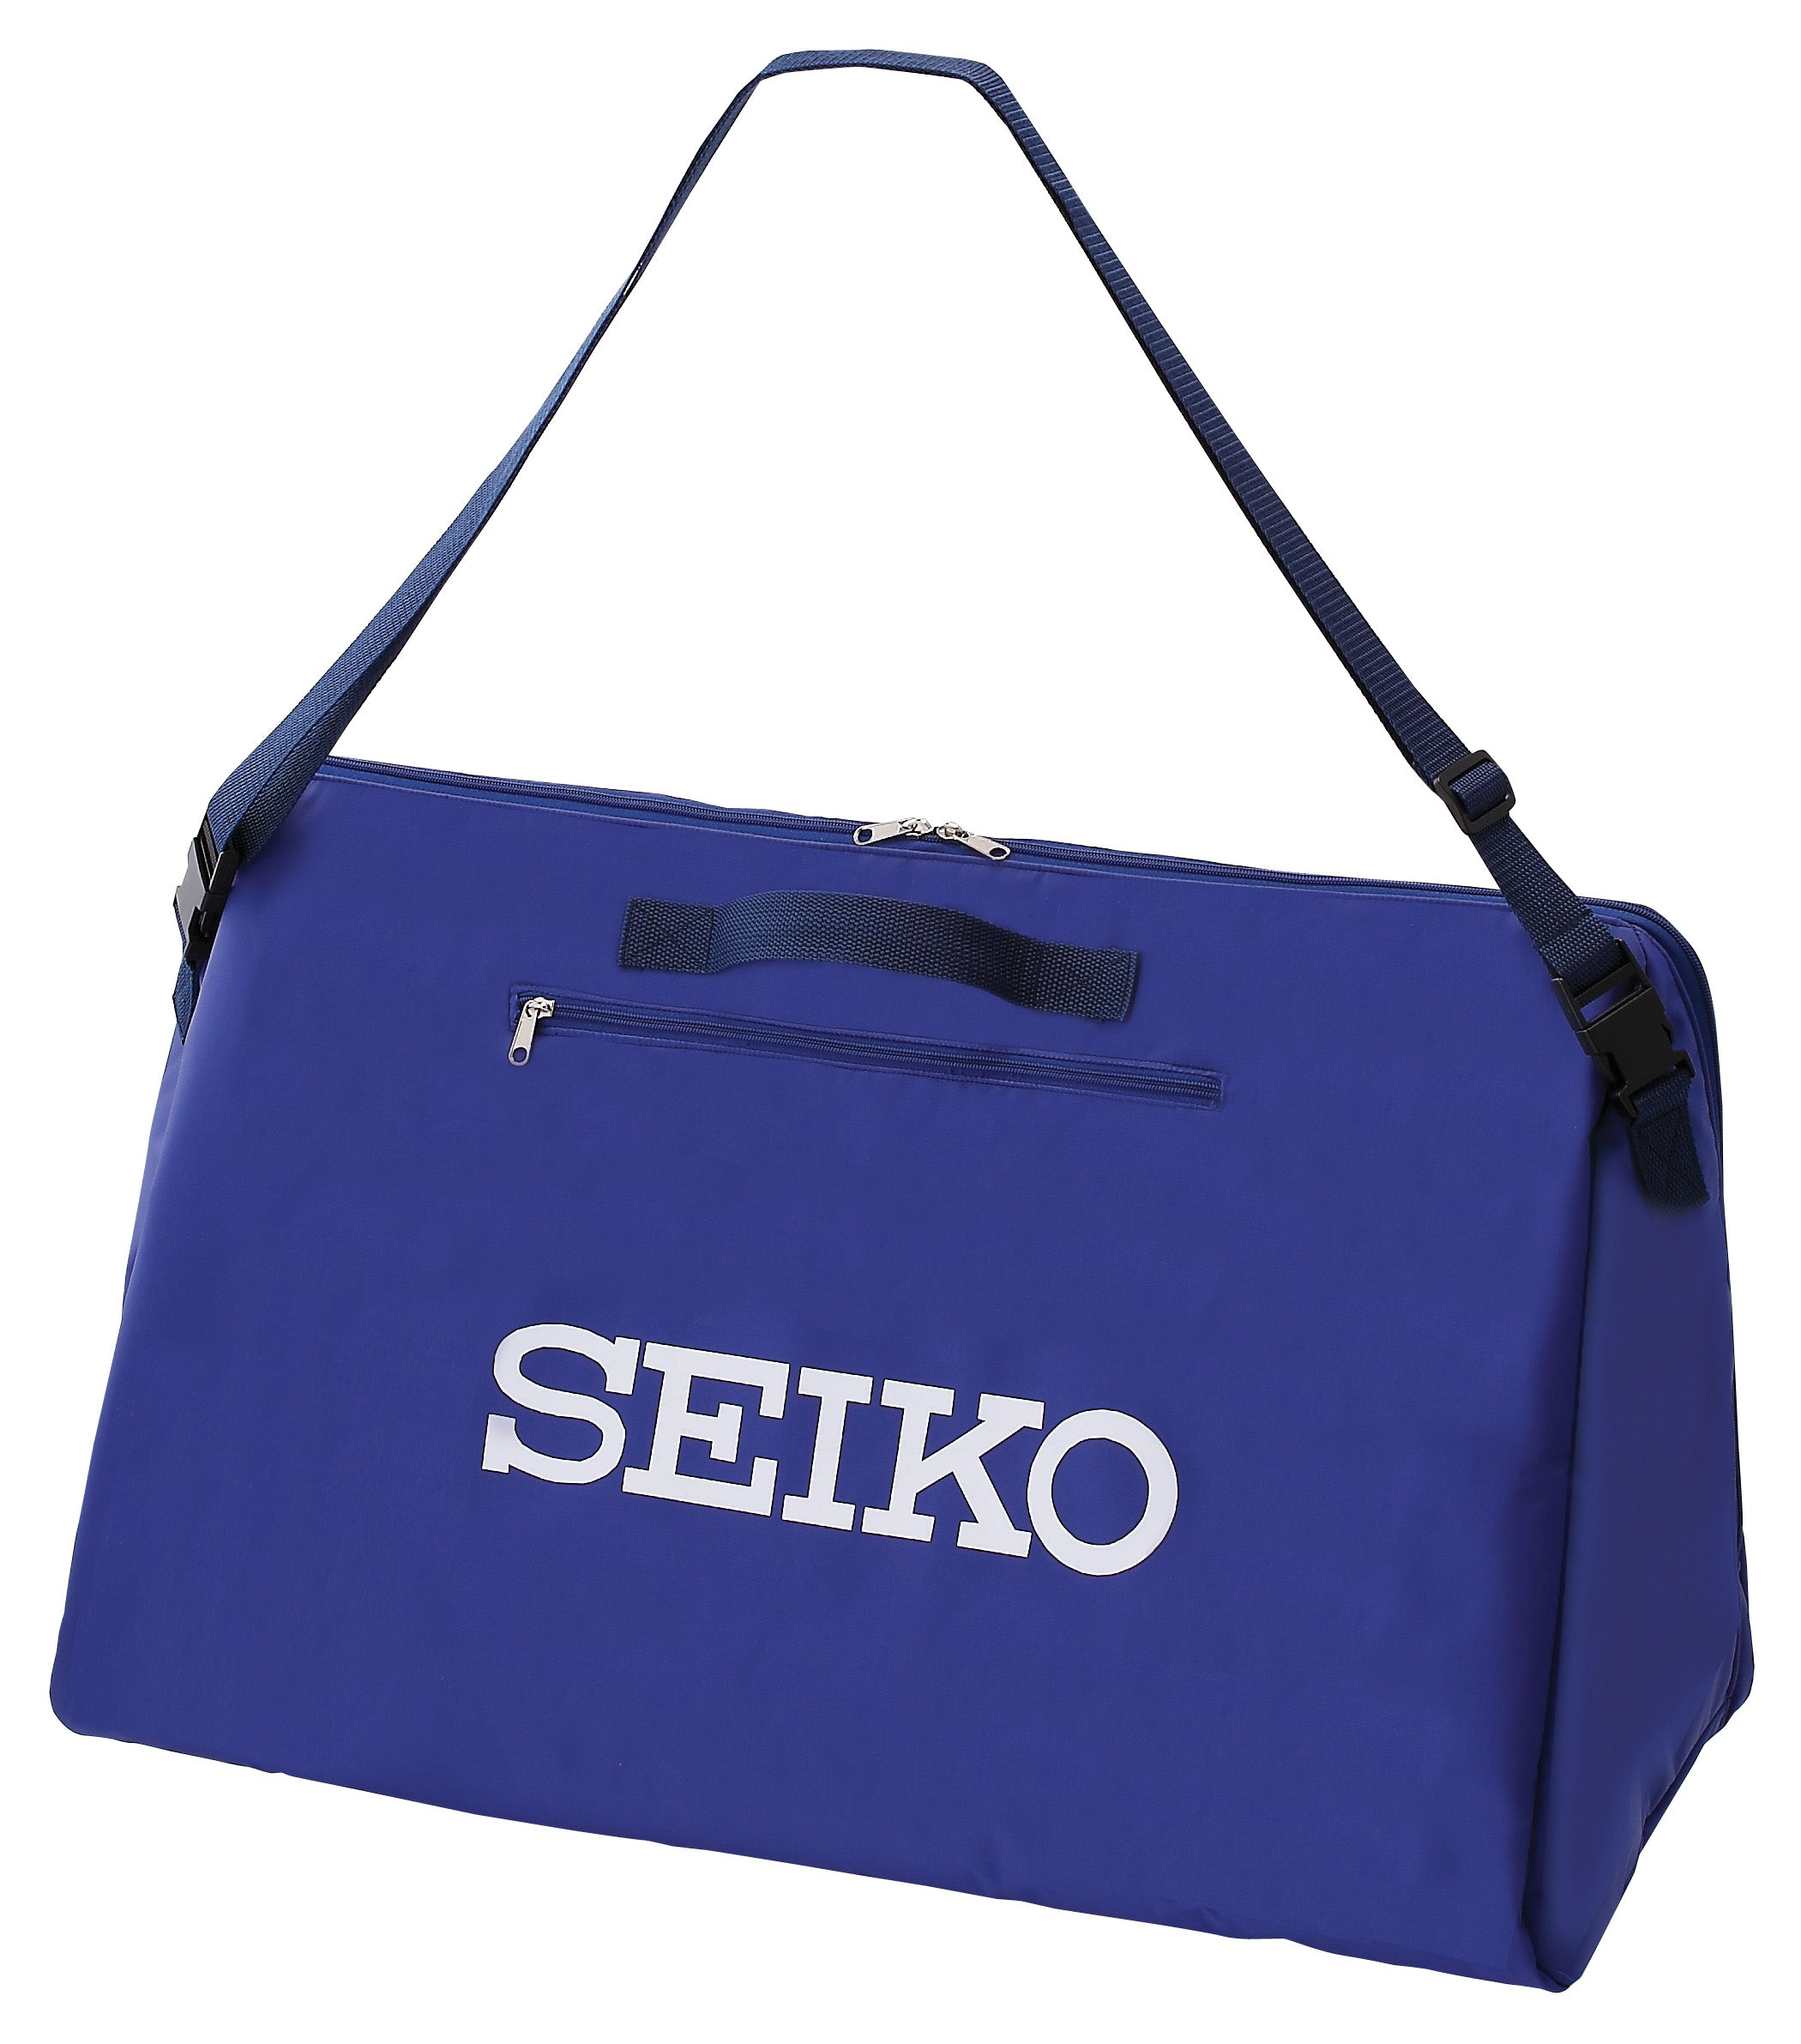 SEIKO KT-032 - Carrying Bag | SEIKO & Ultrak Timing from CEI